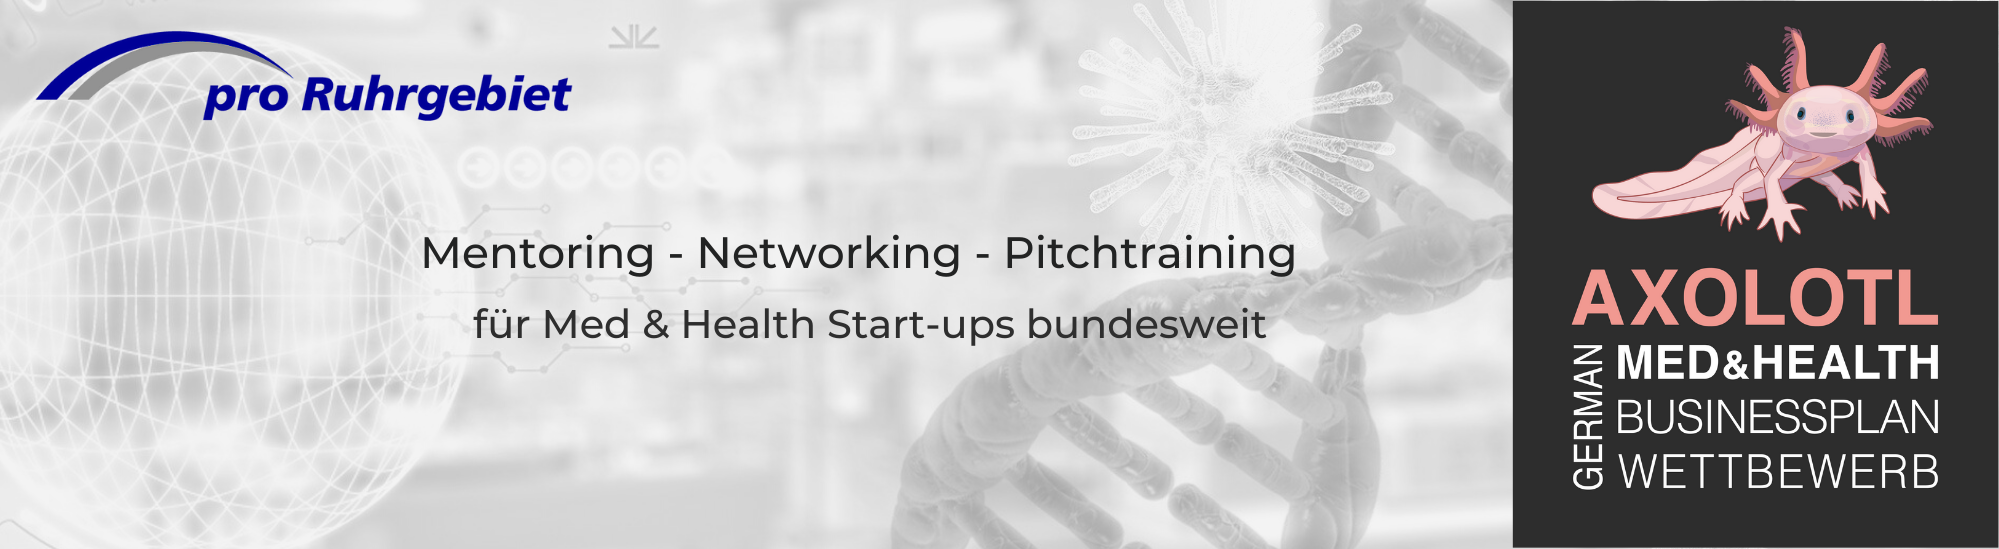 AXOLOTL German MED&HEALTH Businessplan Wettbewerb